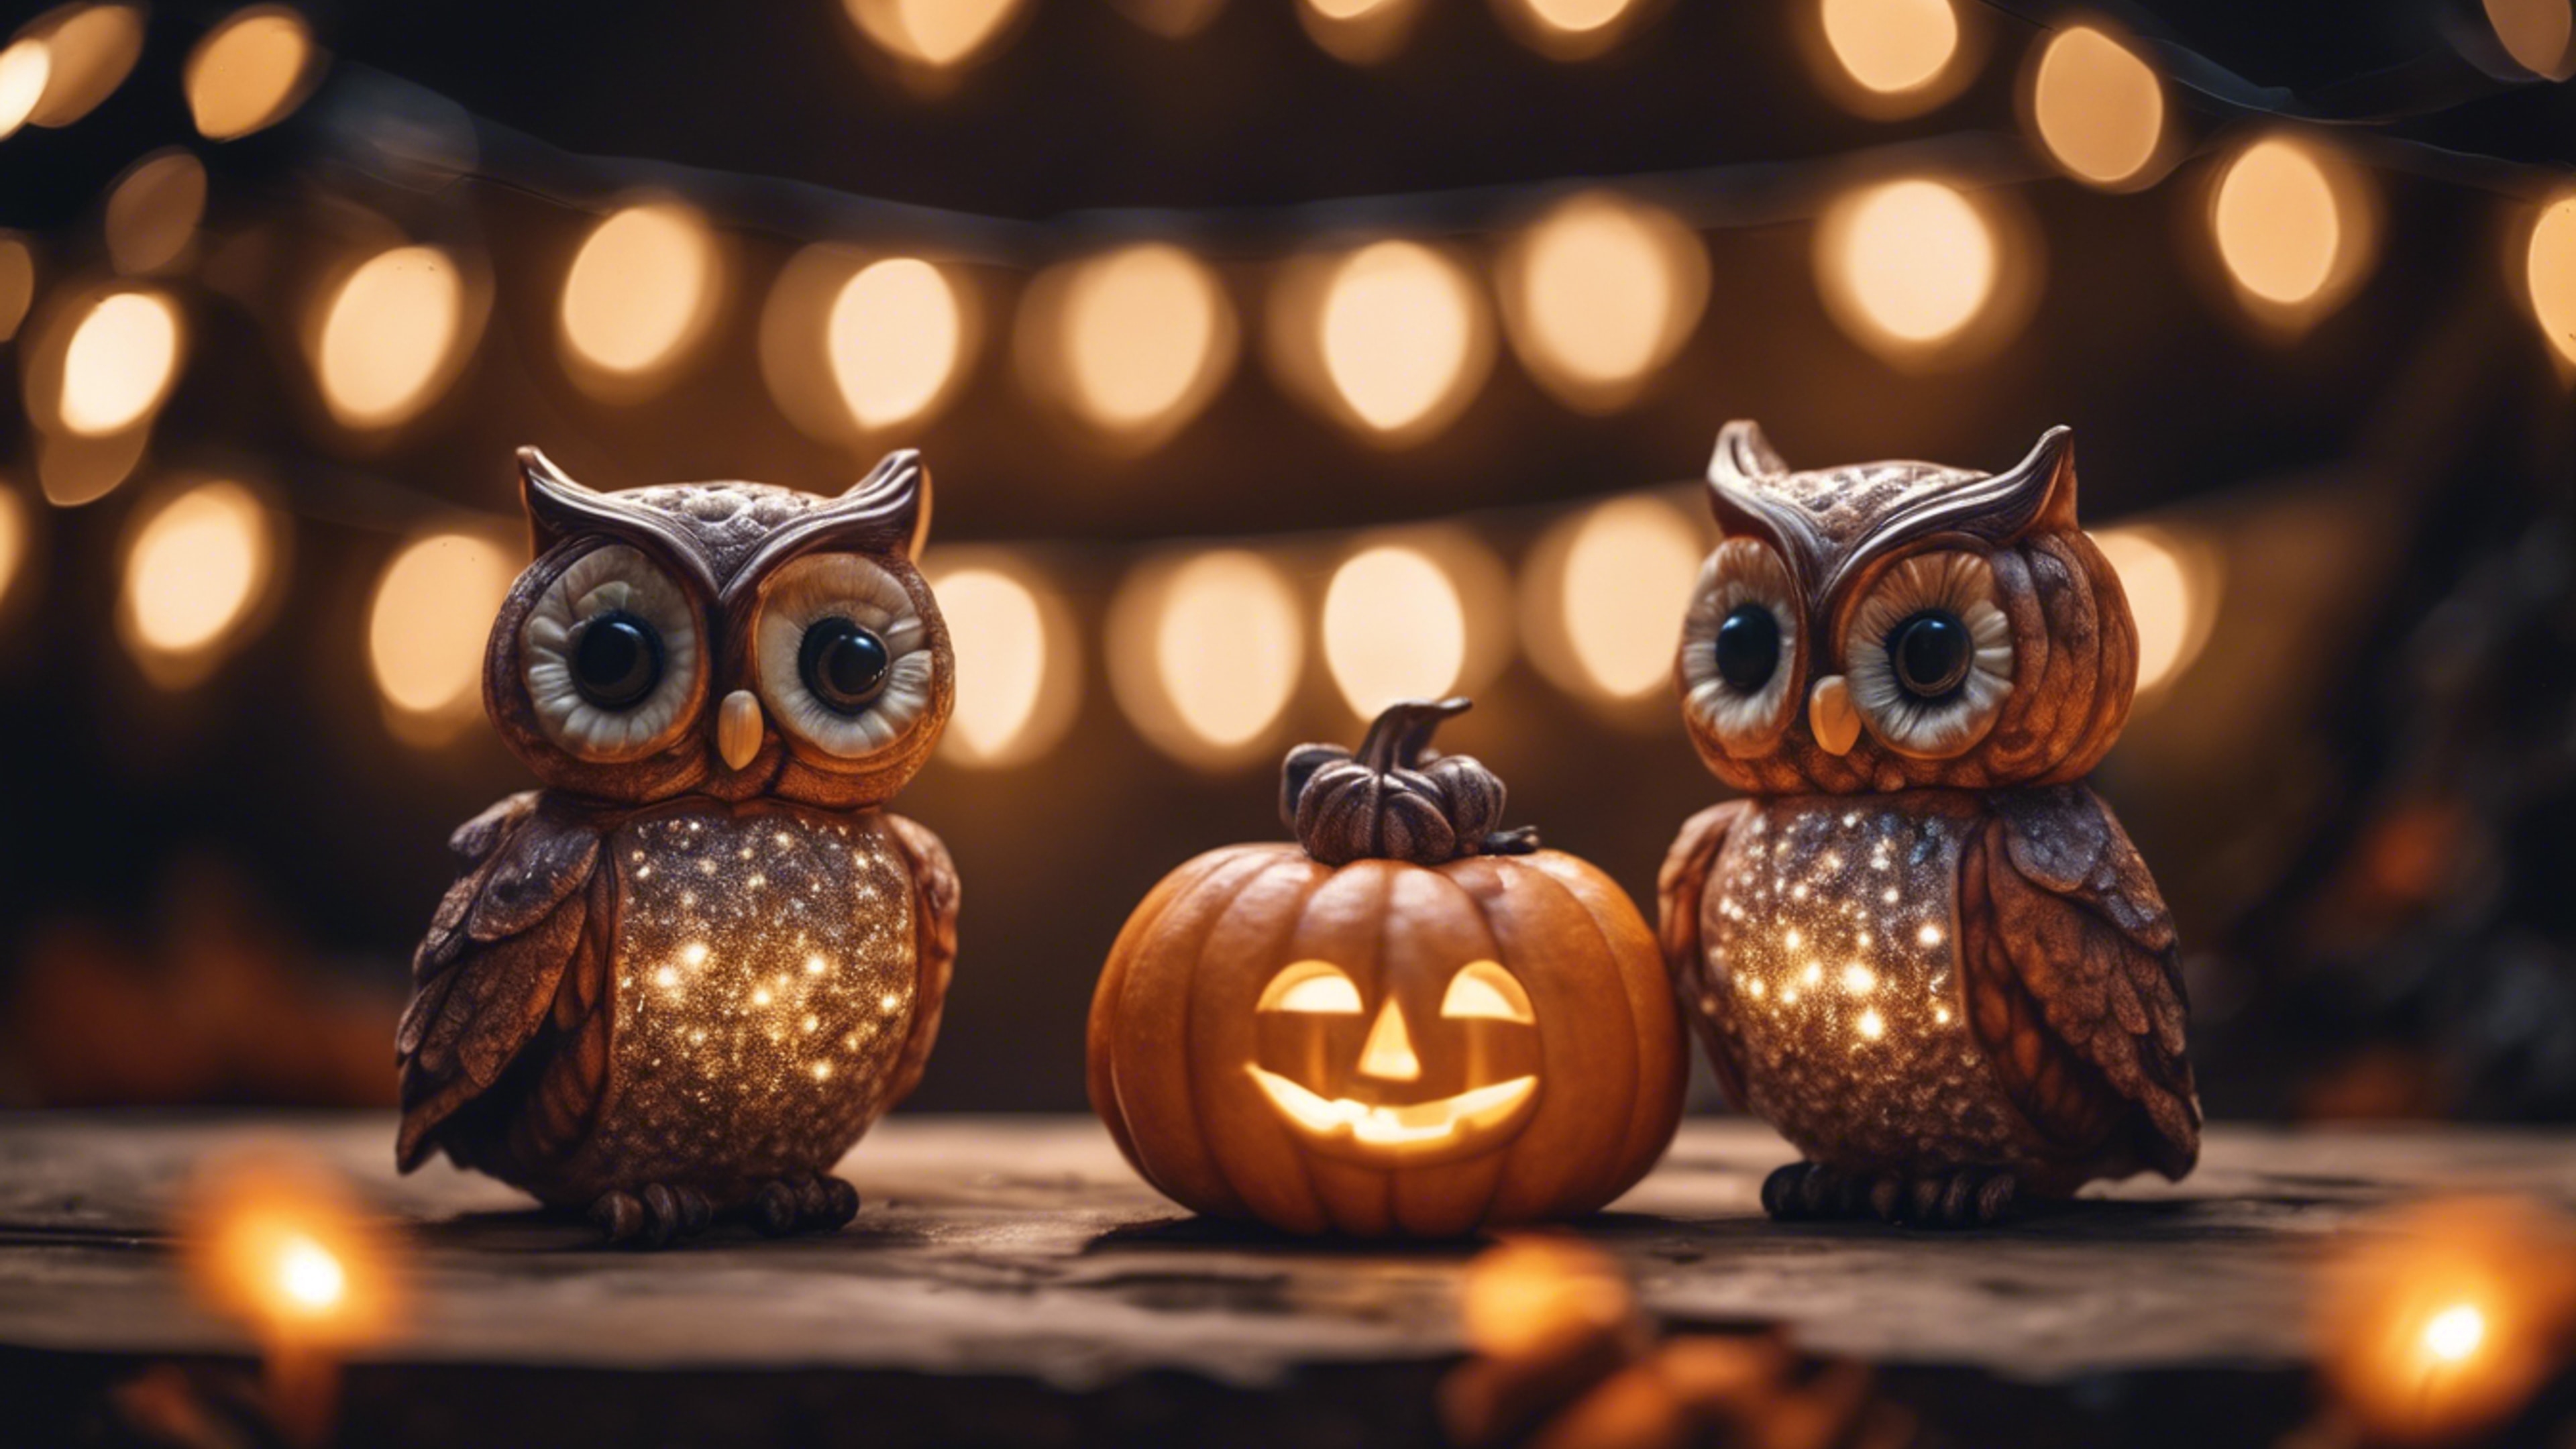 A pair of kawaii owls sitting on a pumpkin under twinkling fairy lights on Halloween night 벽지[39849ffb0d78427c9221]